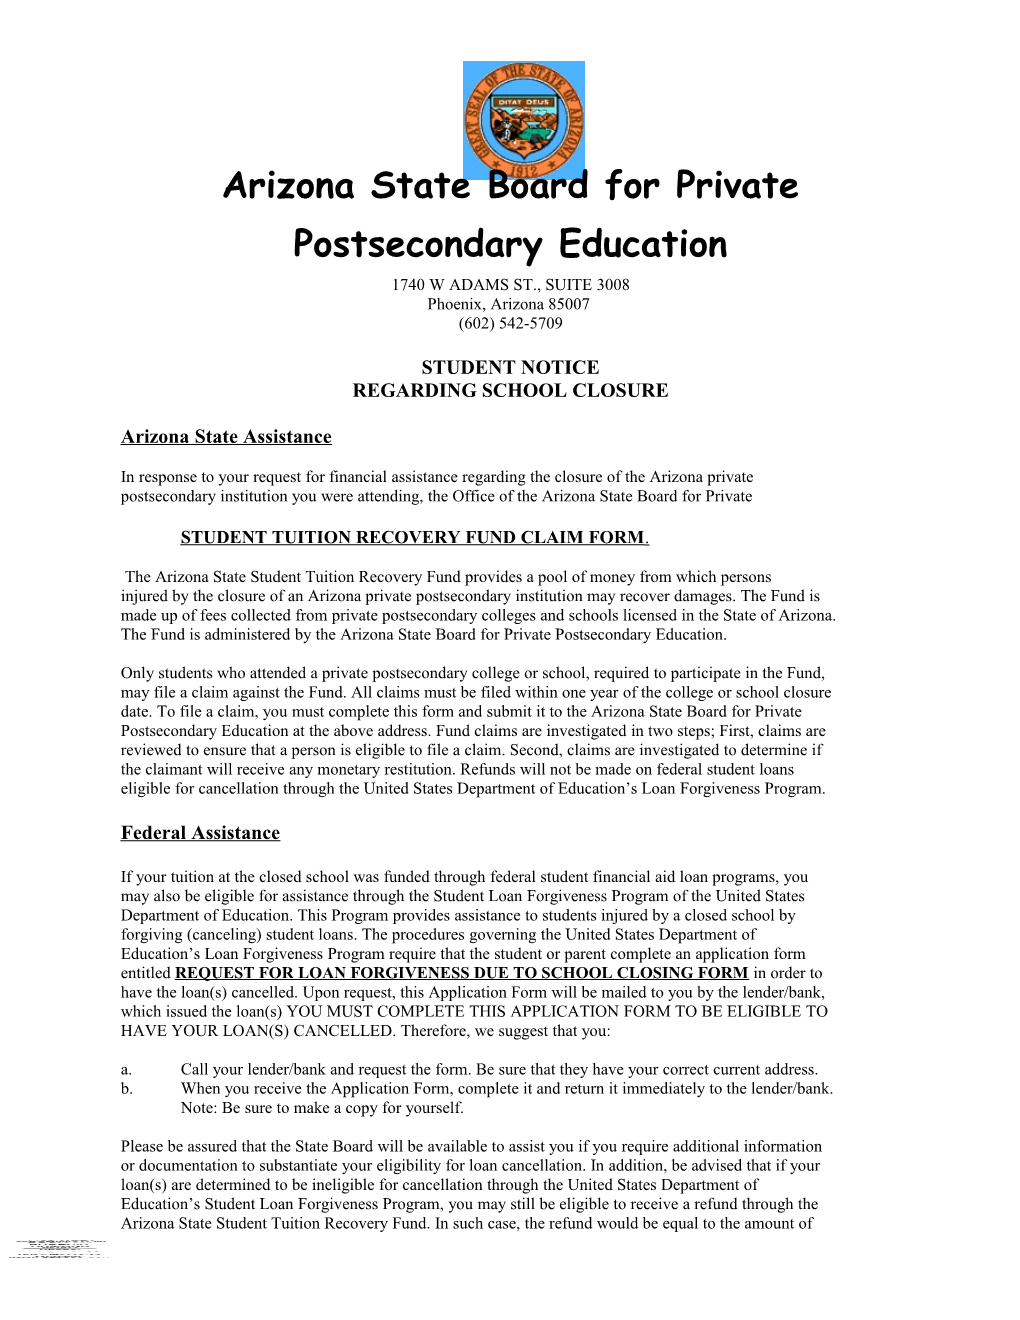 Arizona State Board for Private Postsecondary Education